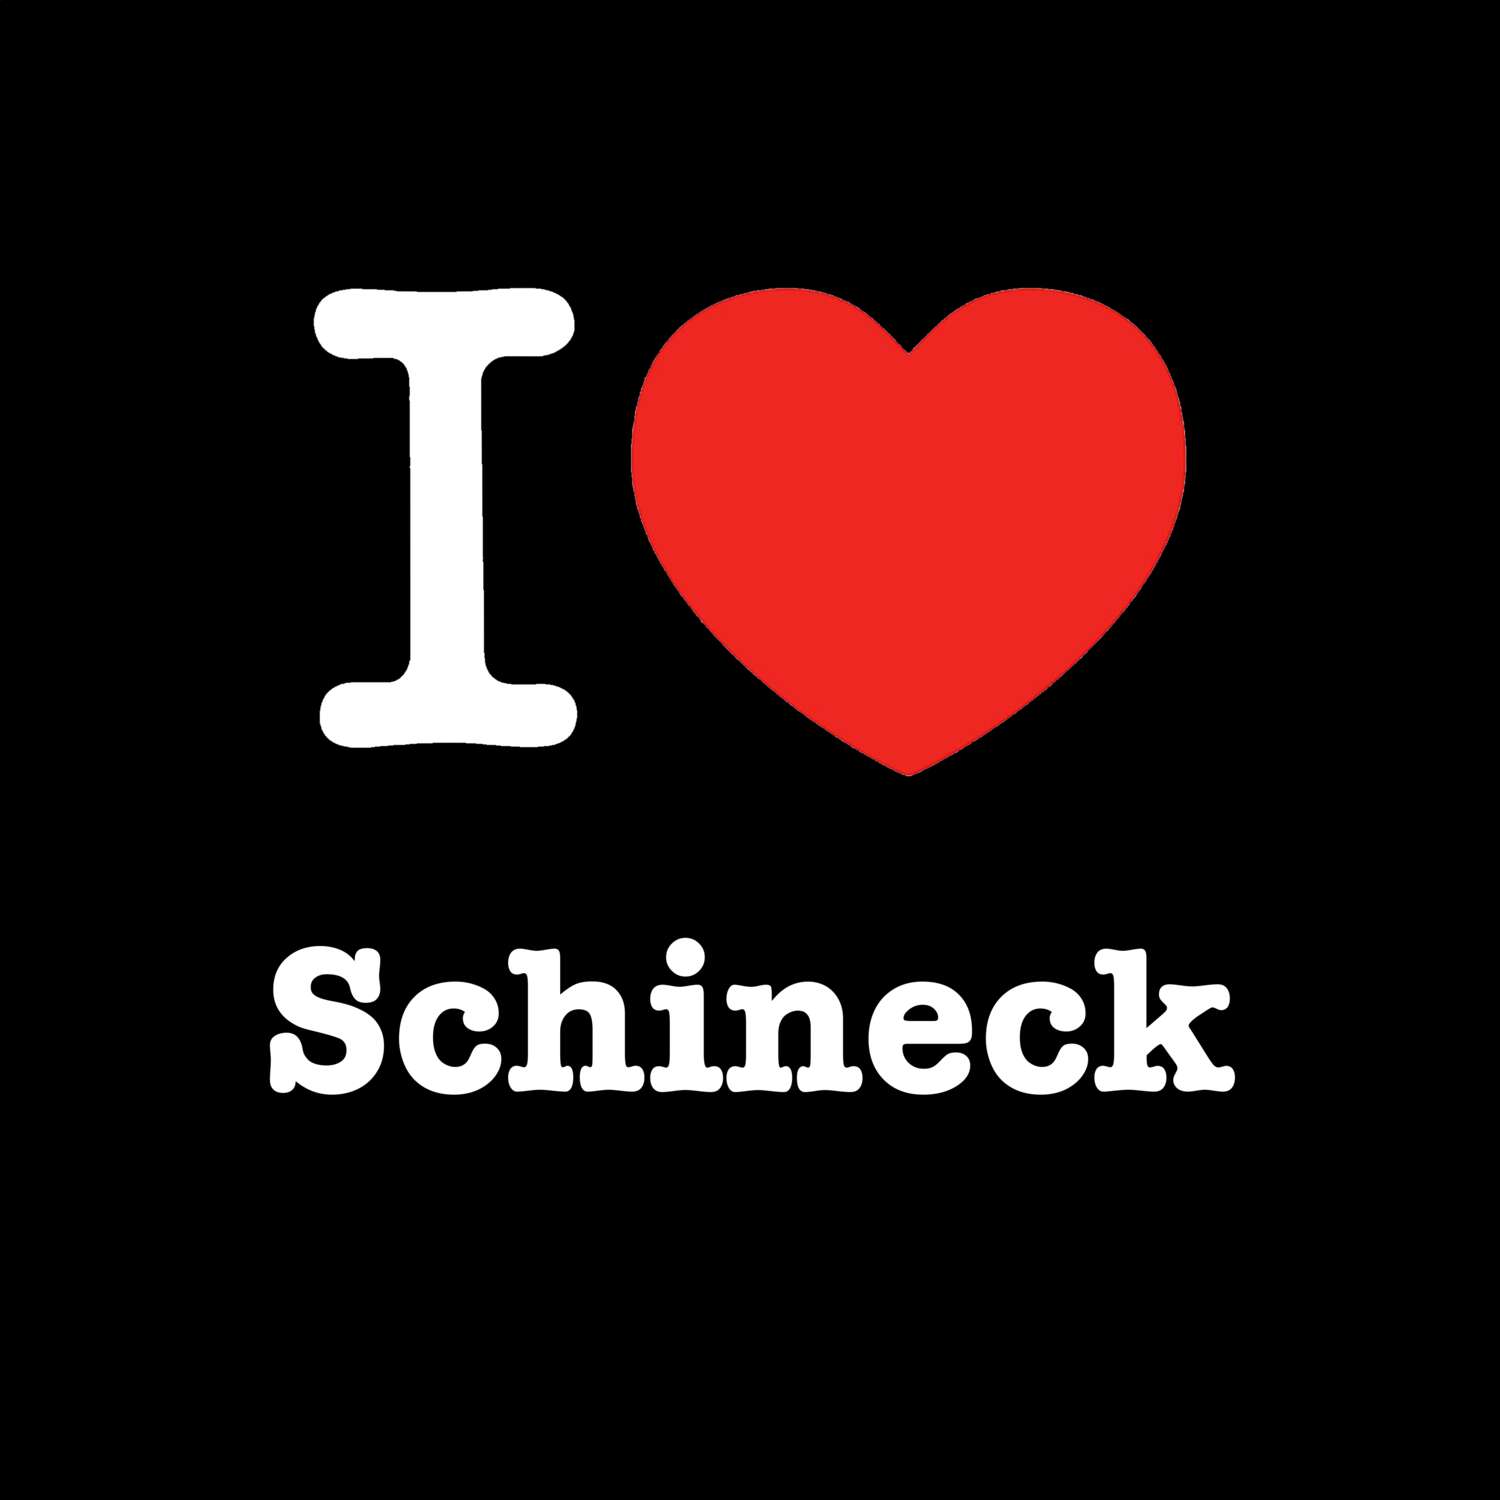 Schineck T-Shirt »I love«